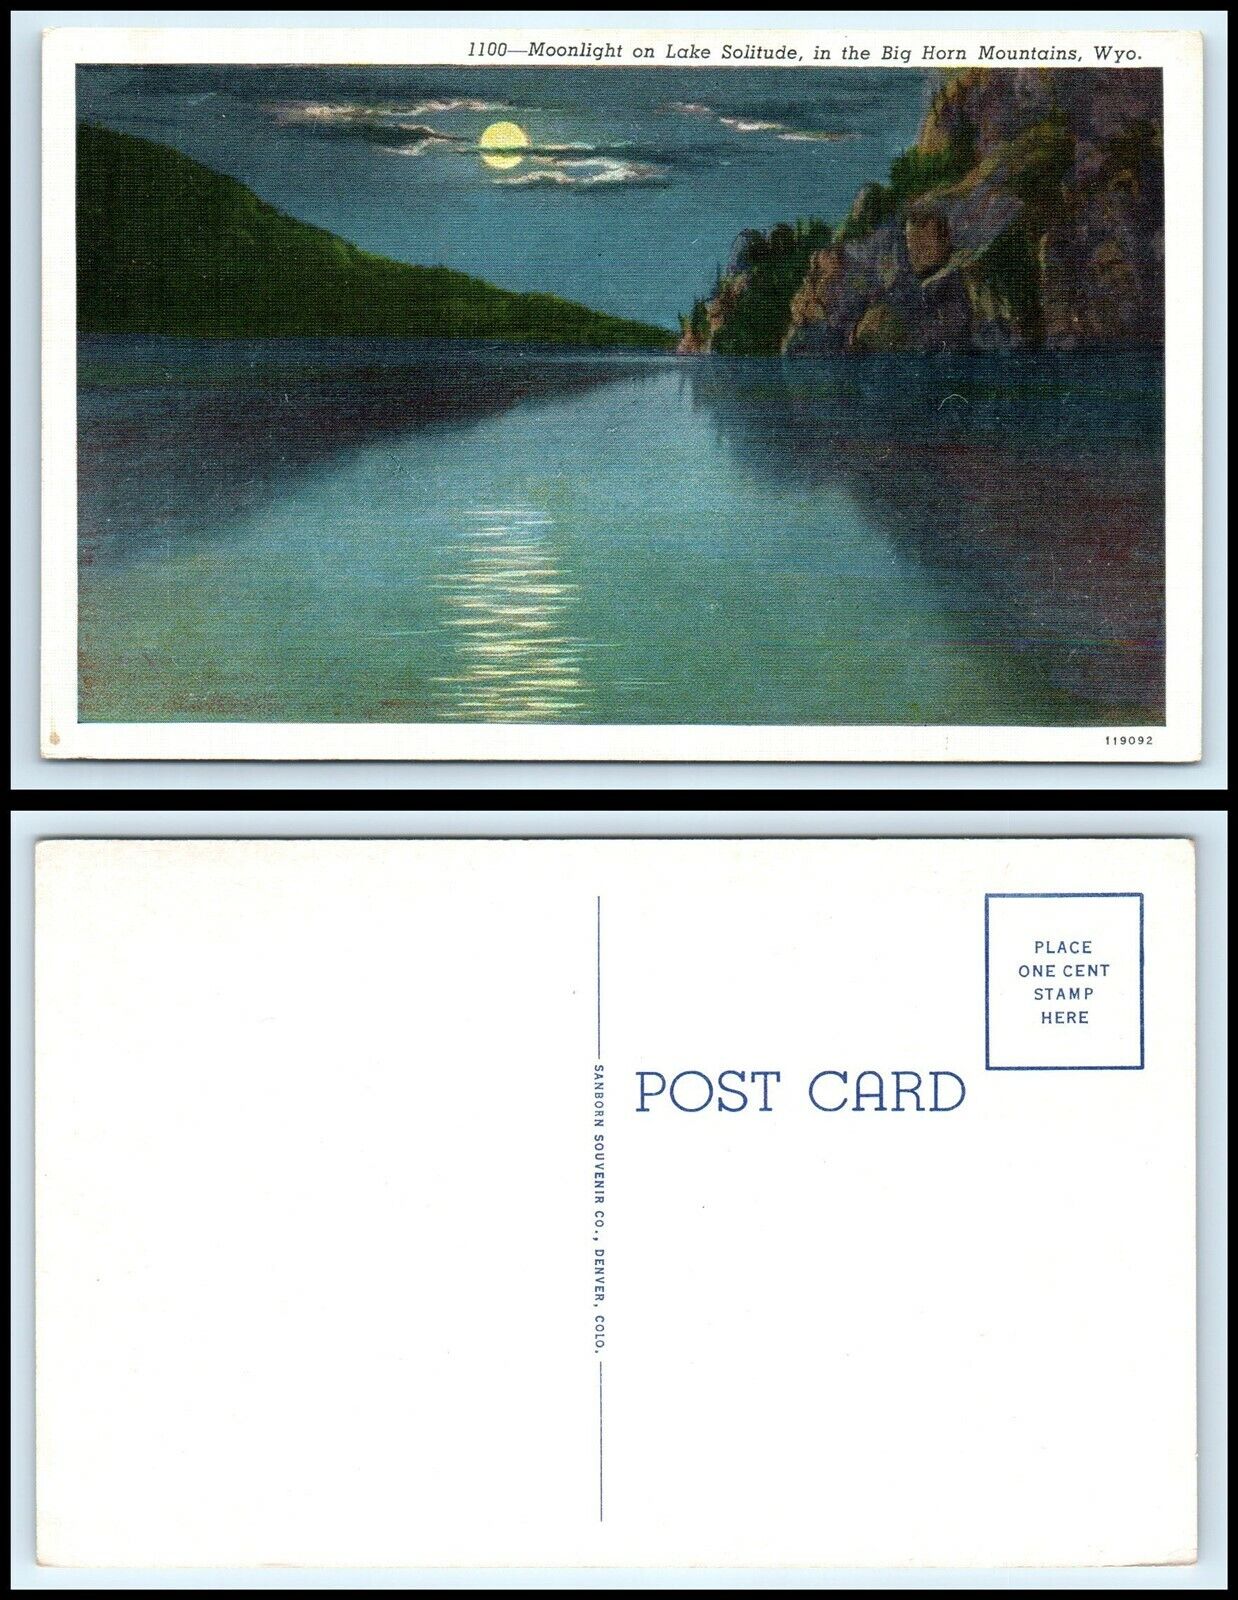 WYOMING Postcard - Lake Solitude At Moonlight / Night, Big Horn Mountains R26